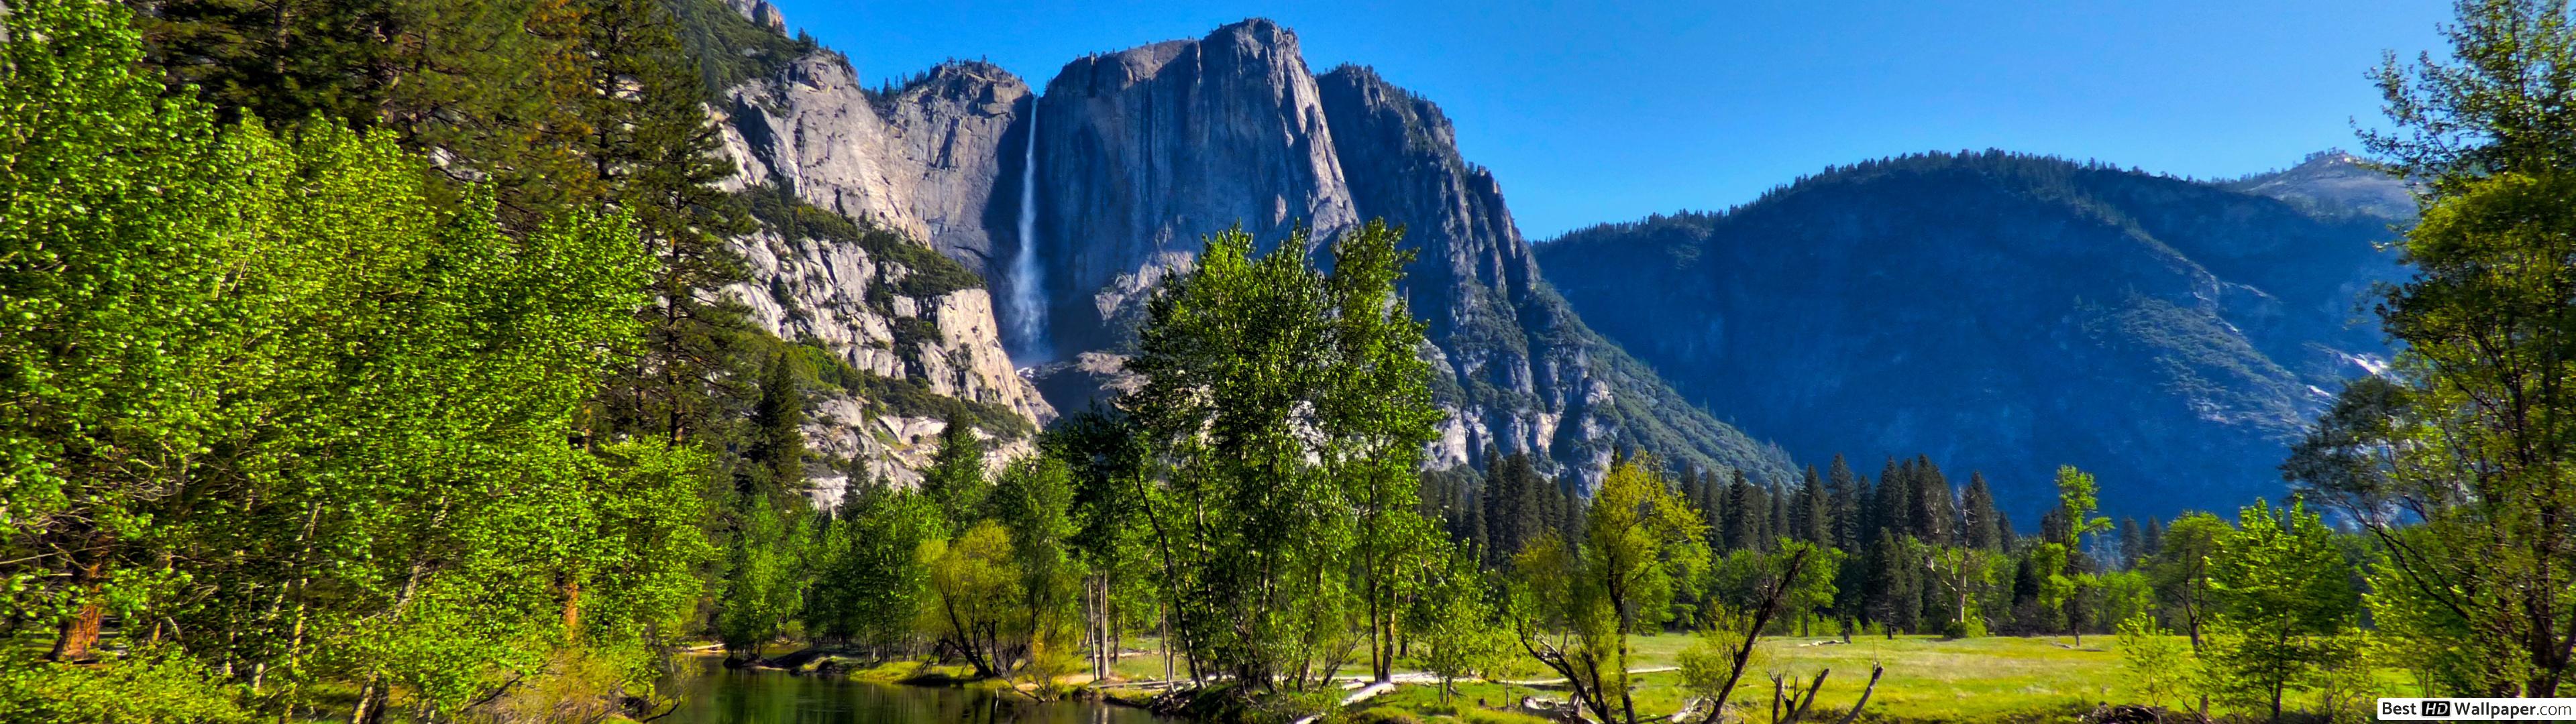 Yosemite National Park, Yosemite Falls